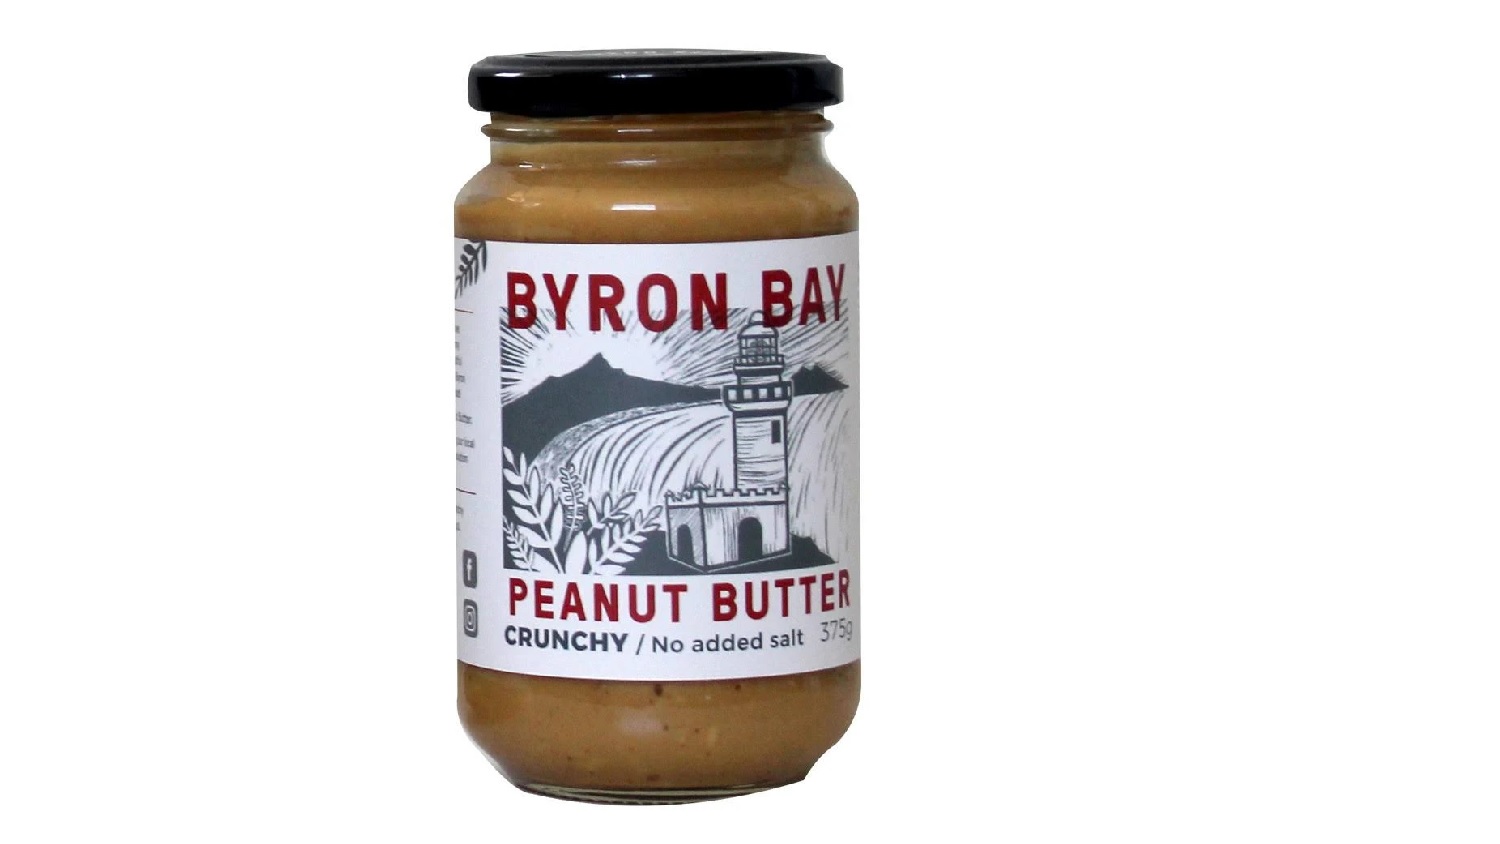 Byron Bay Peanut Butter Co Crunchy, No Added Salt carousel image